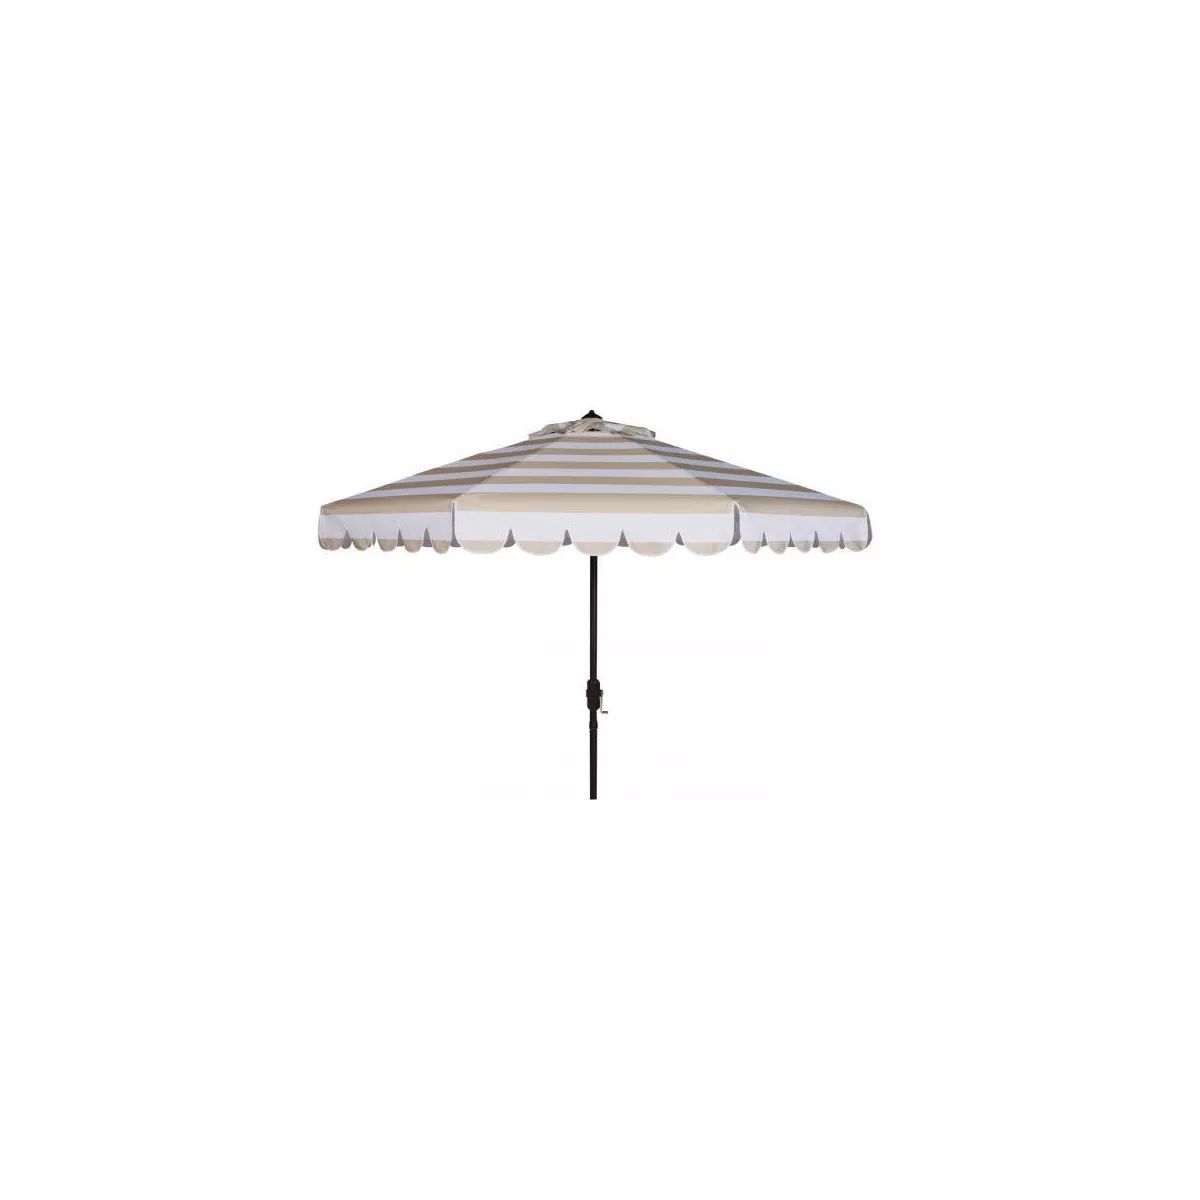 Maui Single Scallop Striped 9Ft Crank Push Button Tilt Patio Outdoor Umbrella  - Safavieh | Target